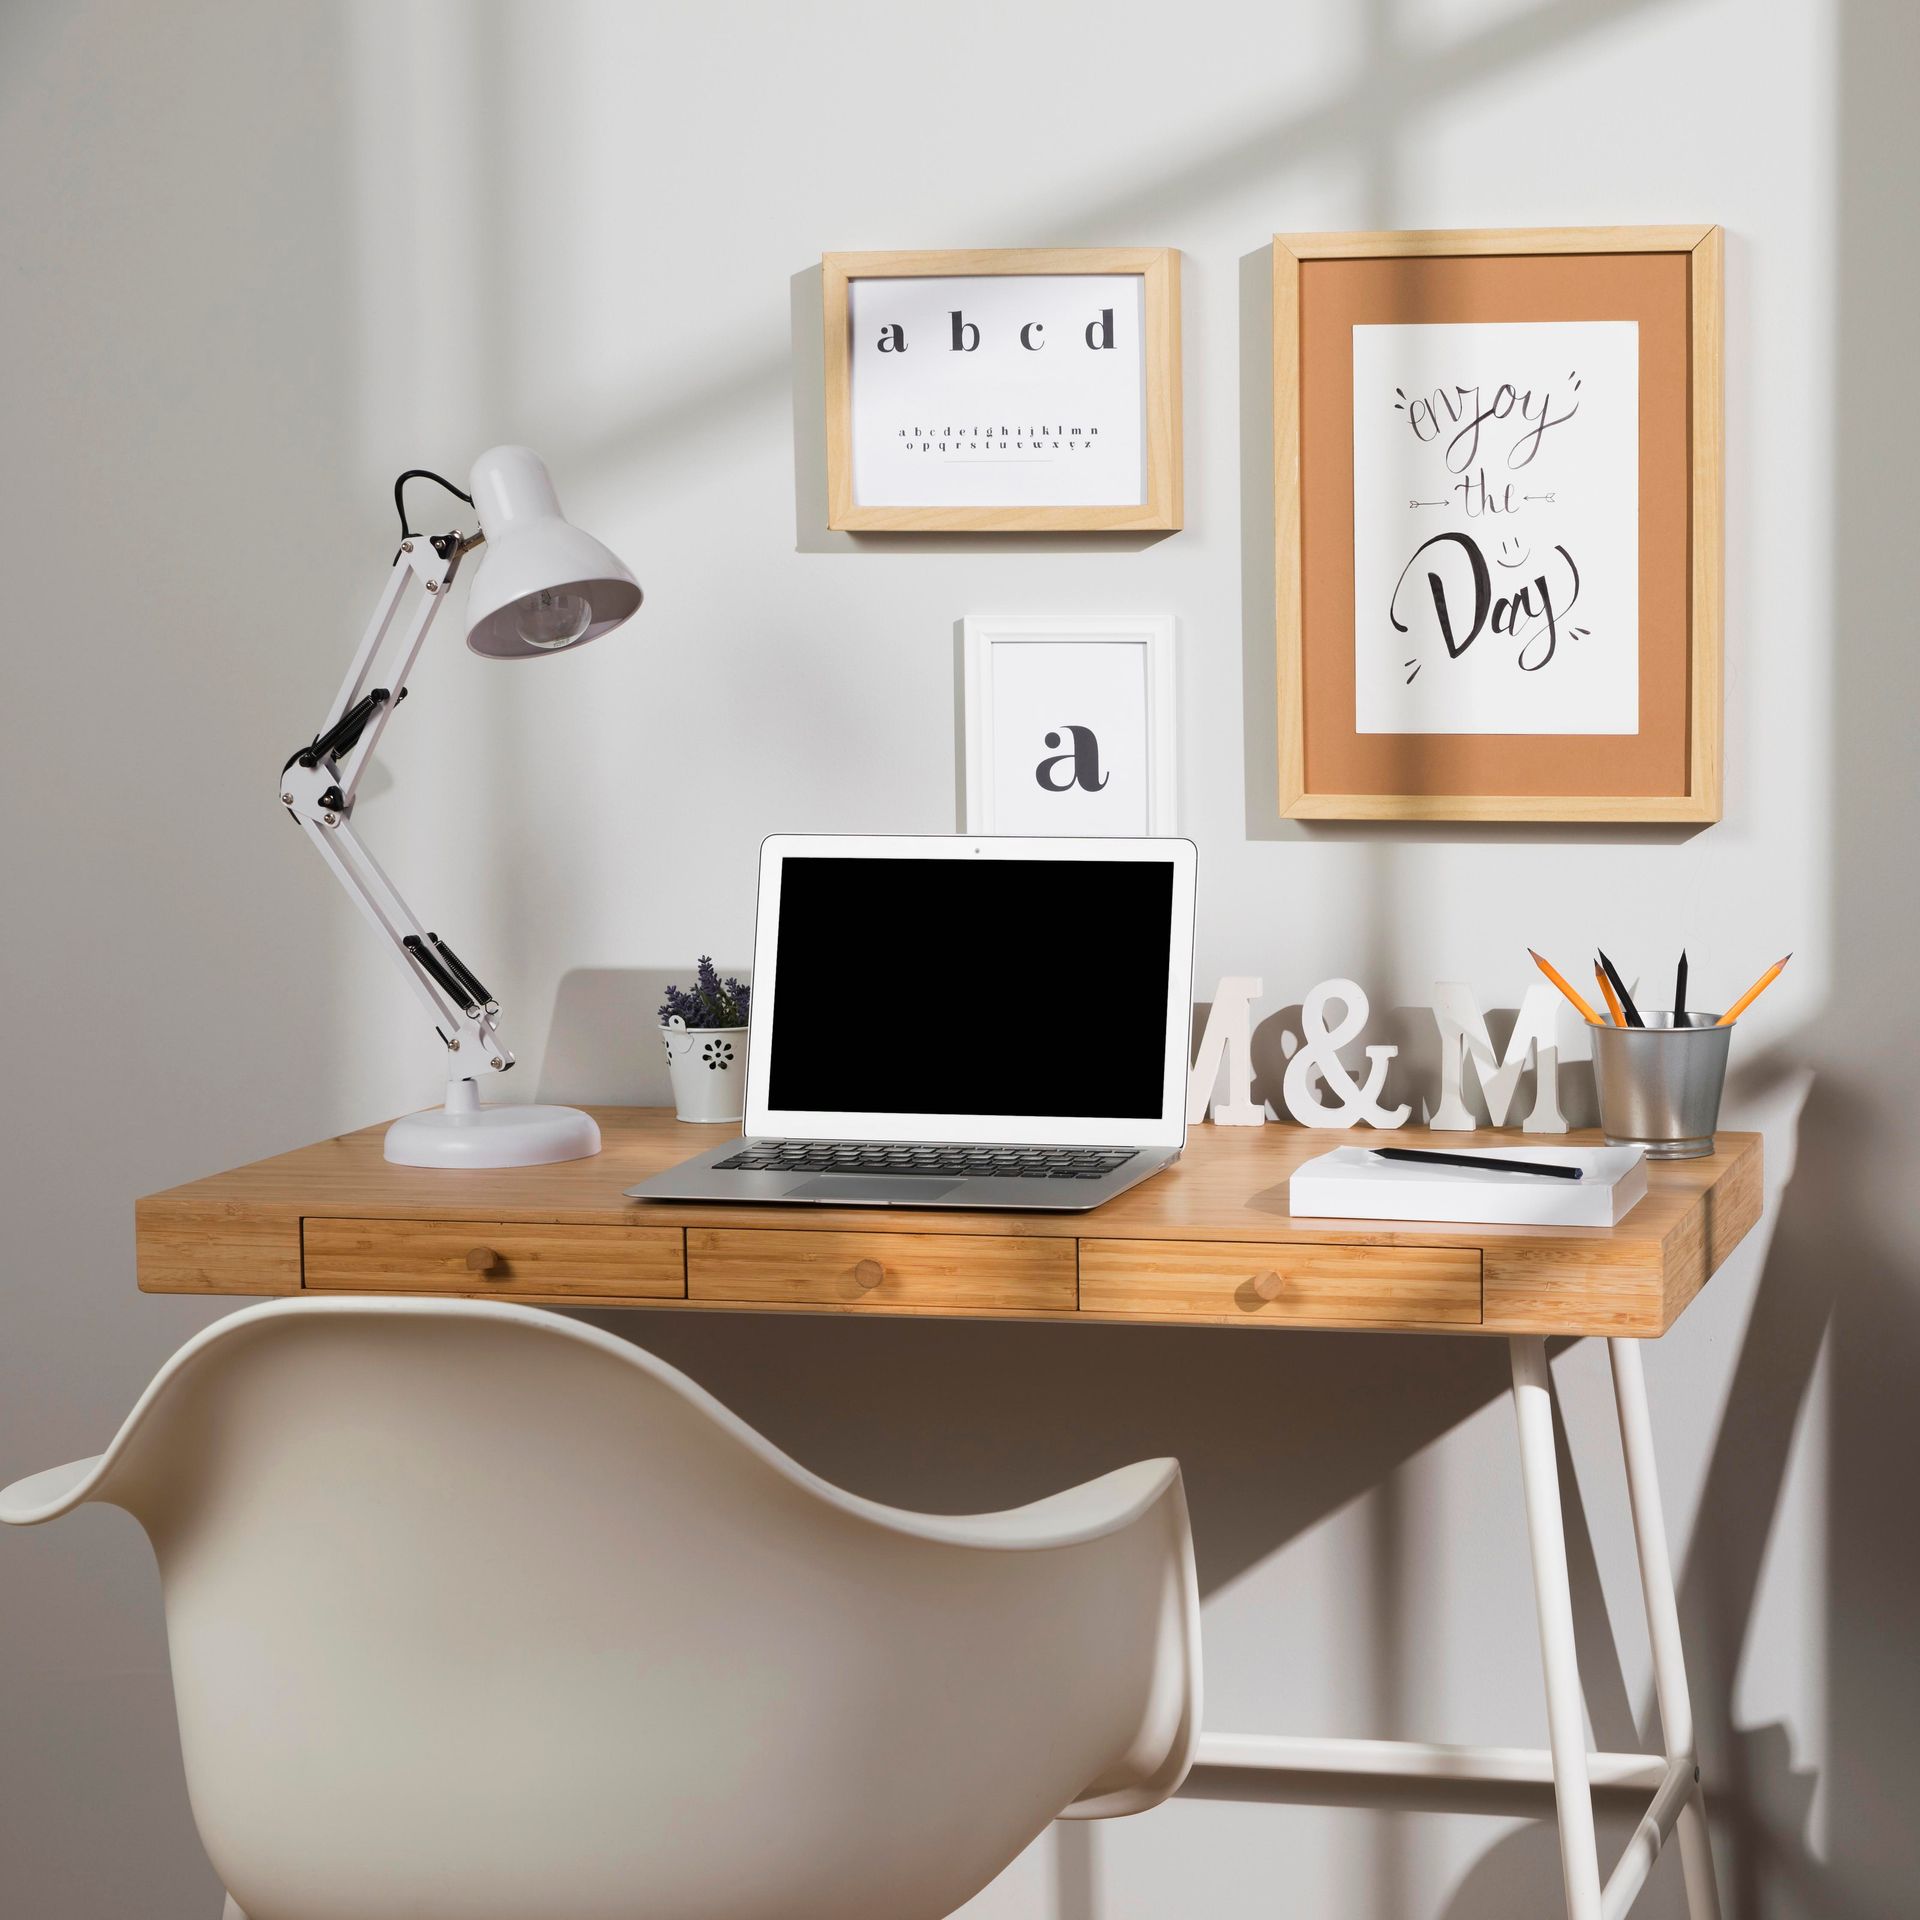 Modern, cosy home office setup